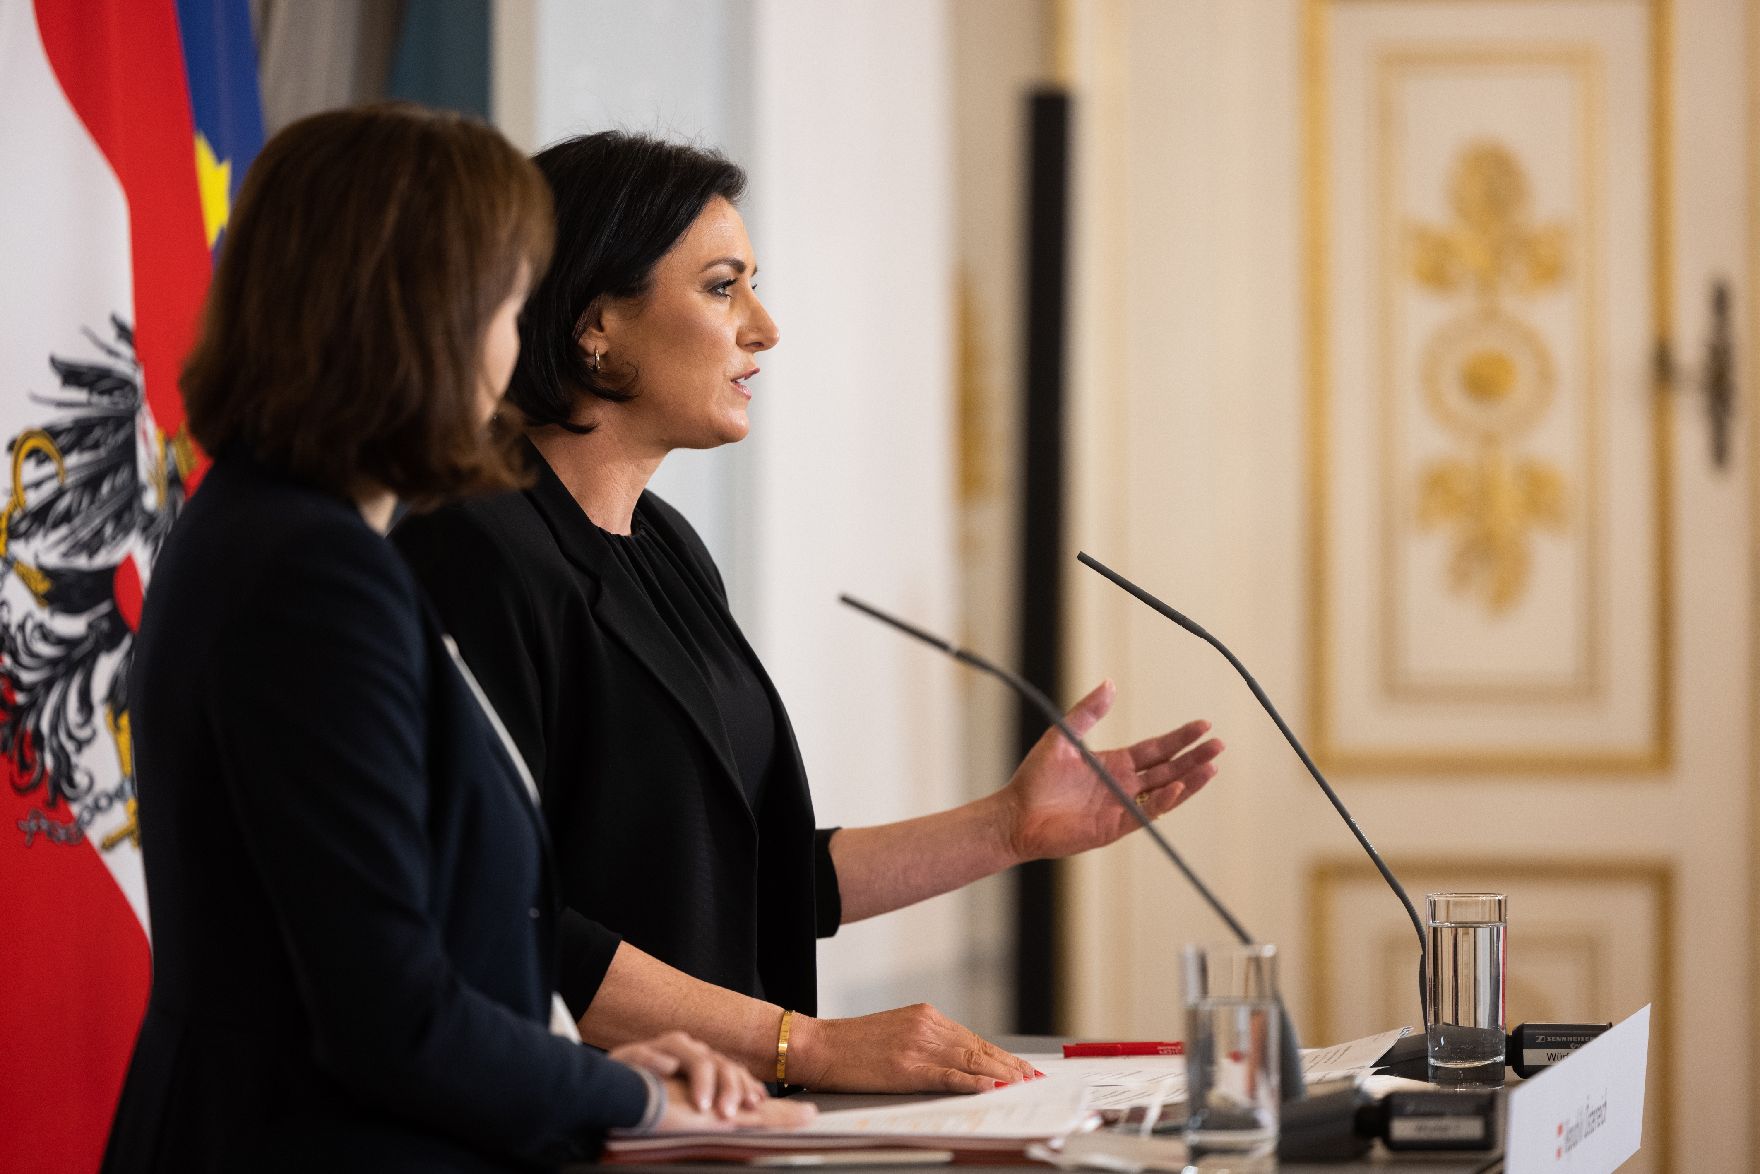 Im Bild Bundesministerin Elisabeth Köstinger (r.) und Bundesministerin Alma Zadic (l.) nach dem Ministerrat am 17. November 2021